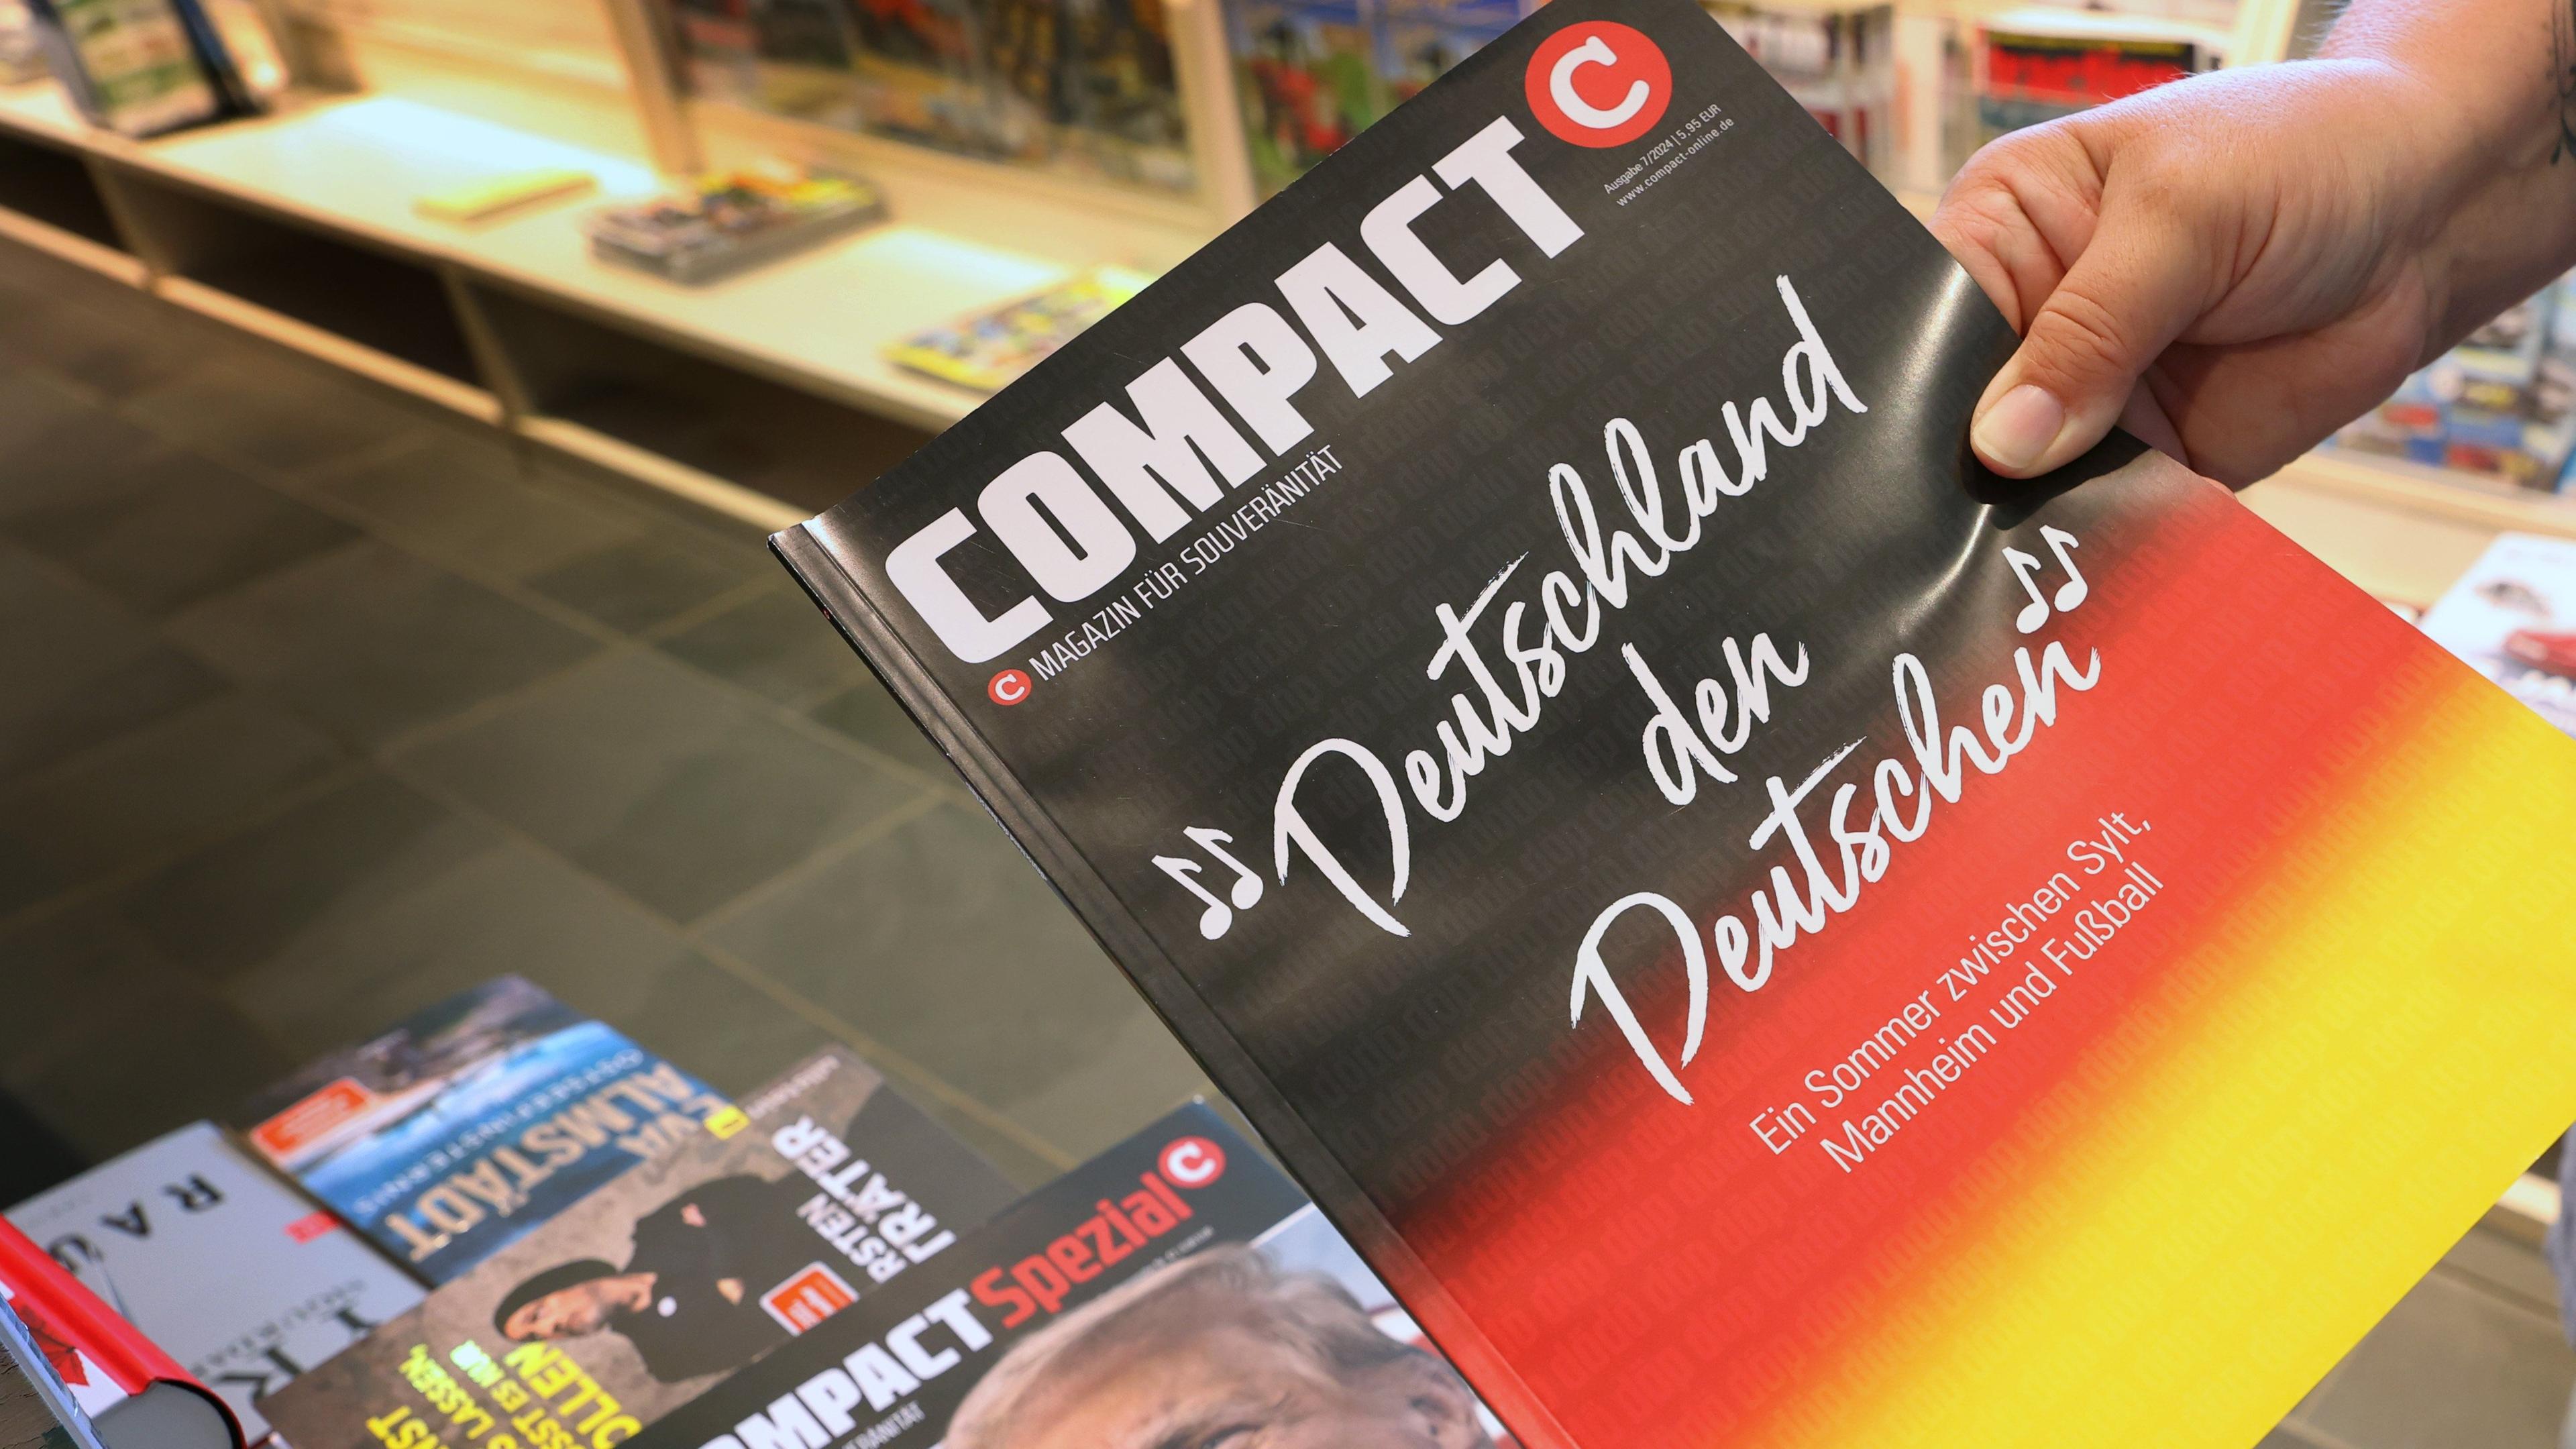 Magazin "Compact" verboten 